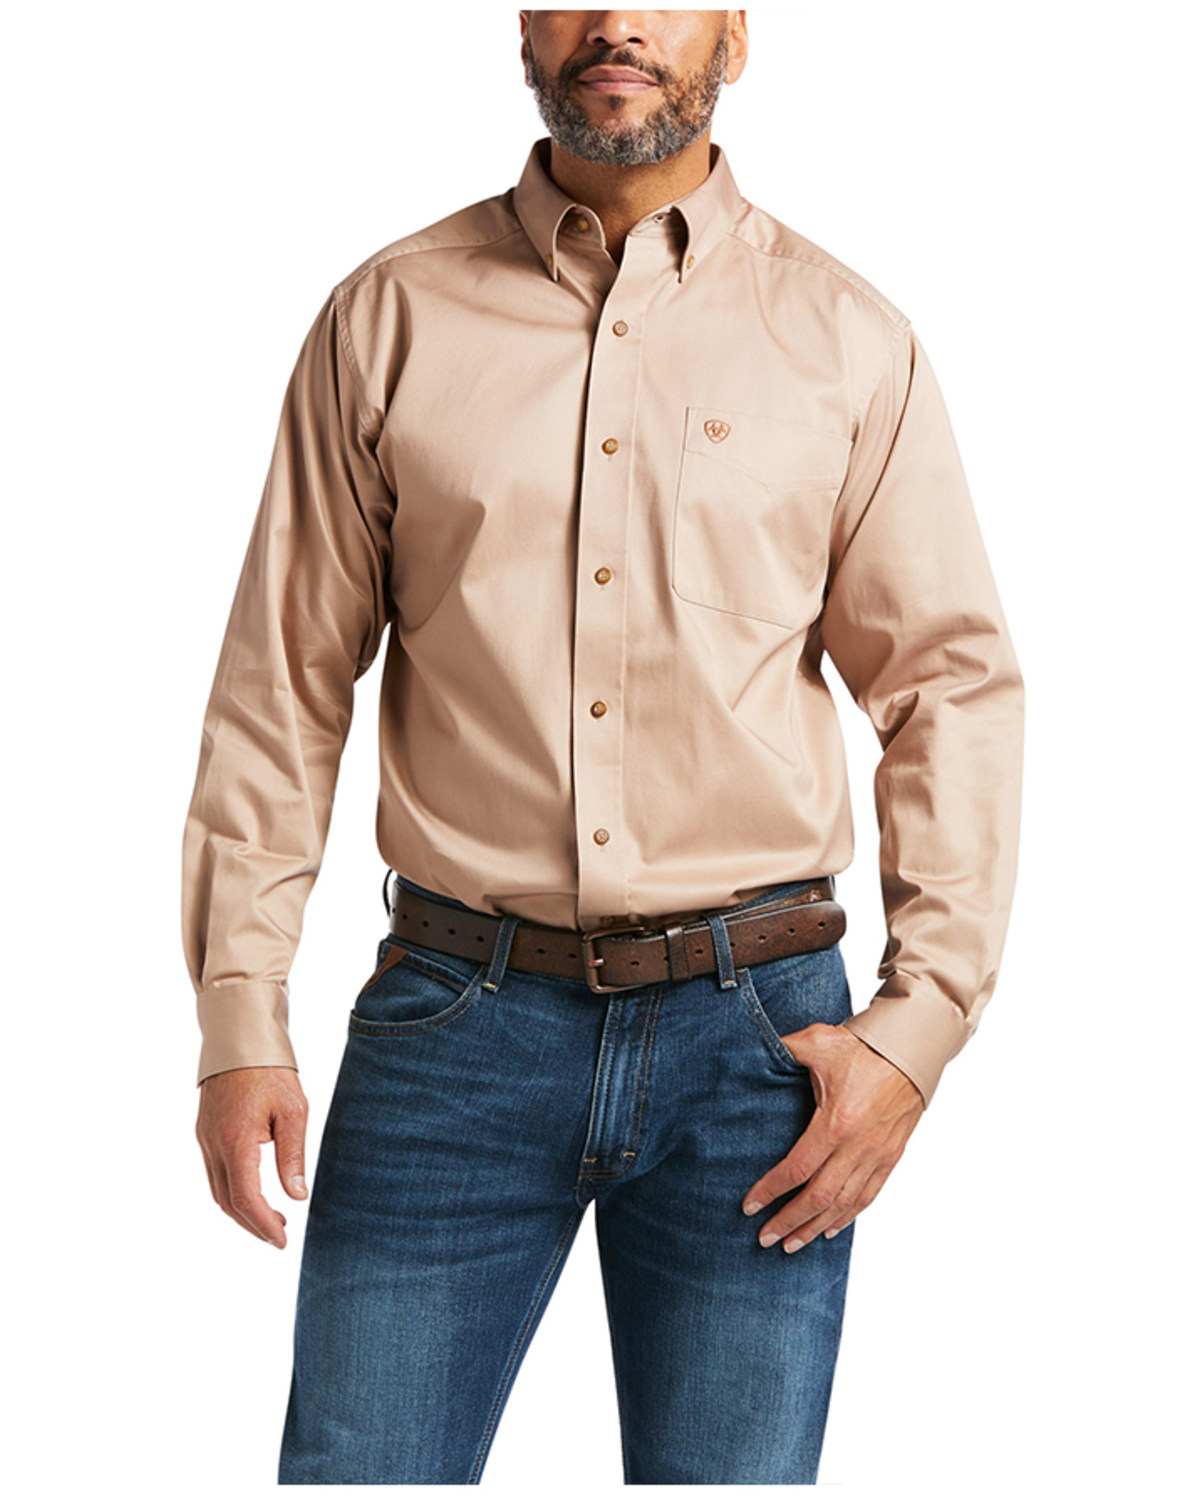 Ariat Men's Solid Khaki Twill Long Sleeve Western Shirt - Big & Tall